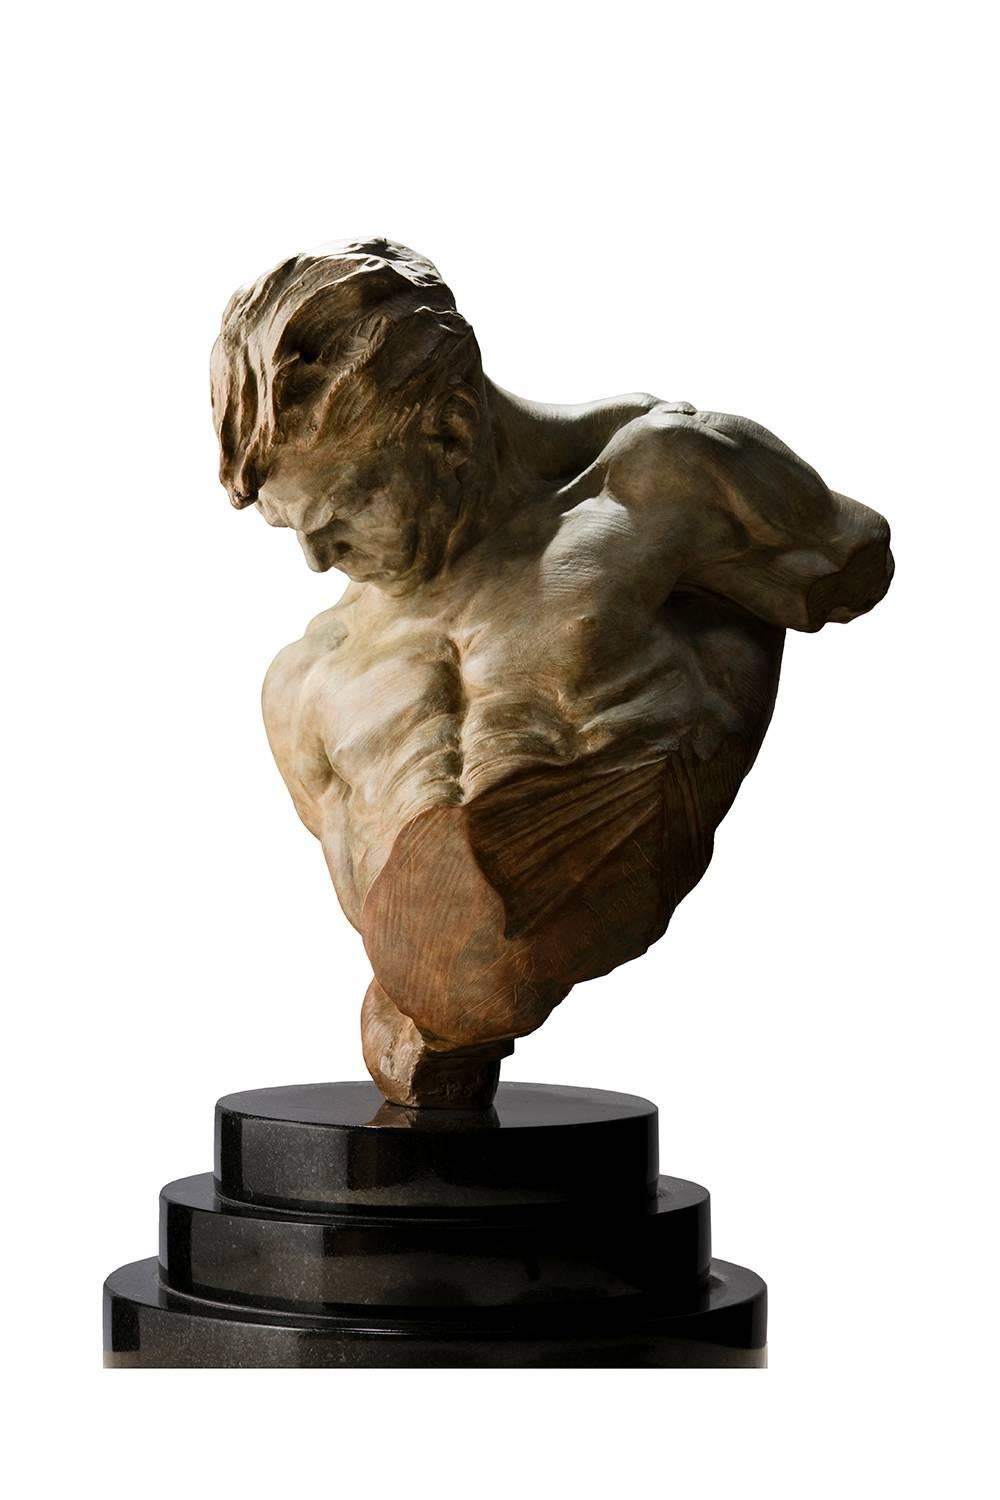 Richard MacDonald Figurative Sculpture - Gymnast Bust, Quarter life